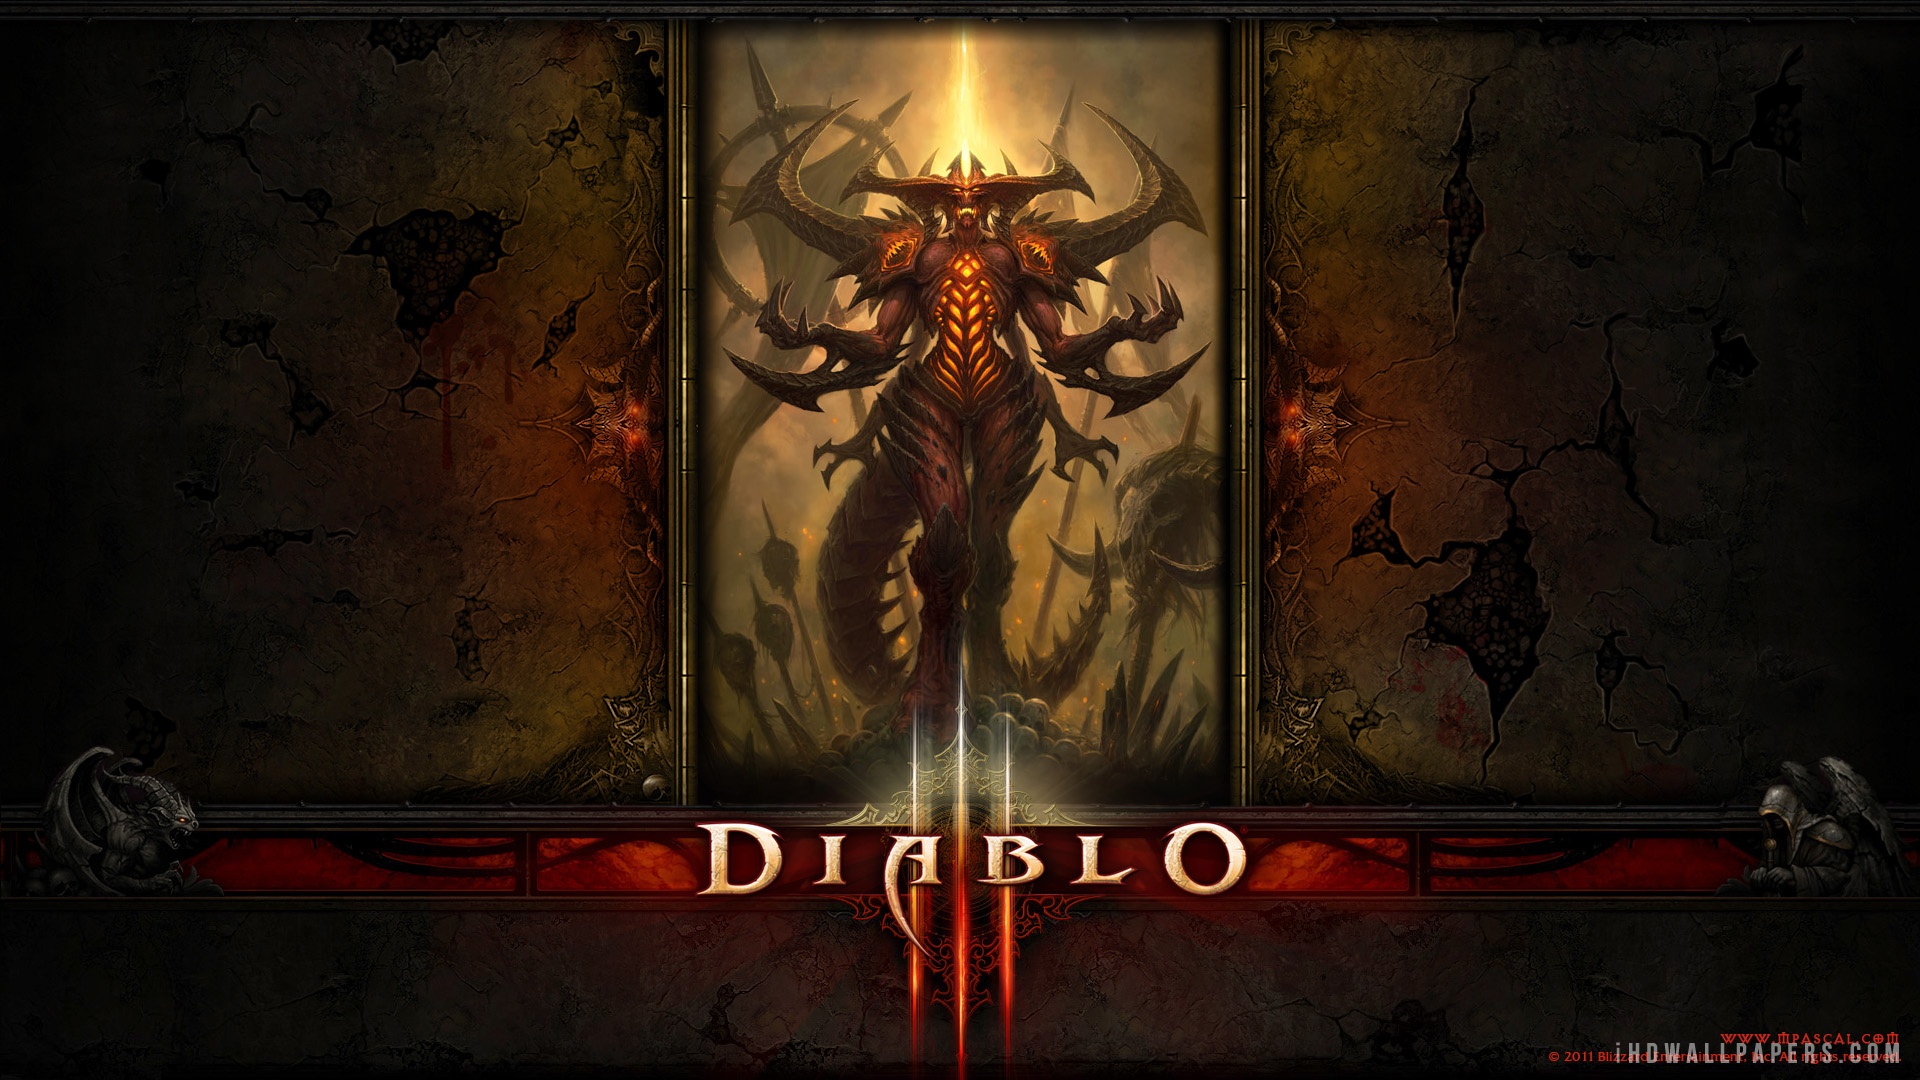  Download Diablo 3 New Diablo WallpaperBackground in 1920x1080